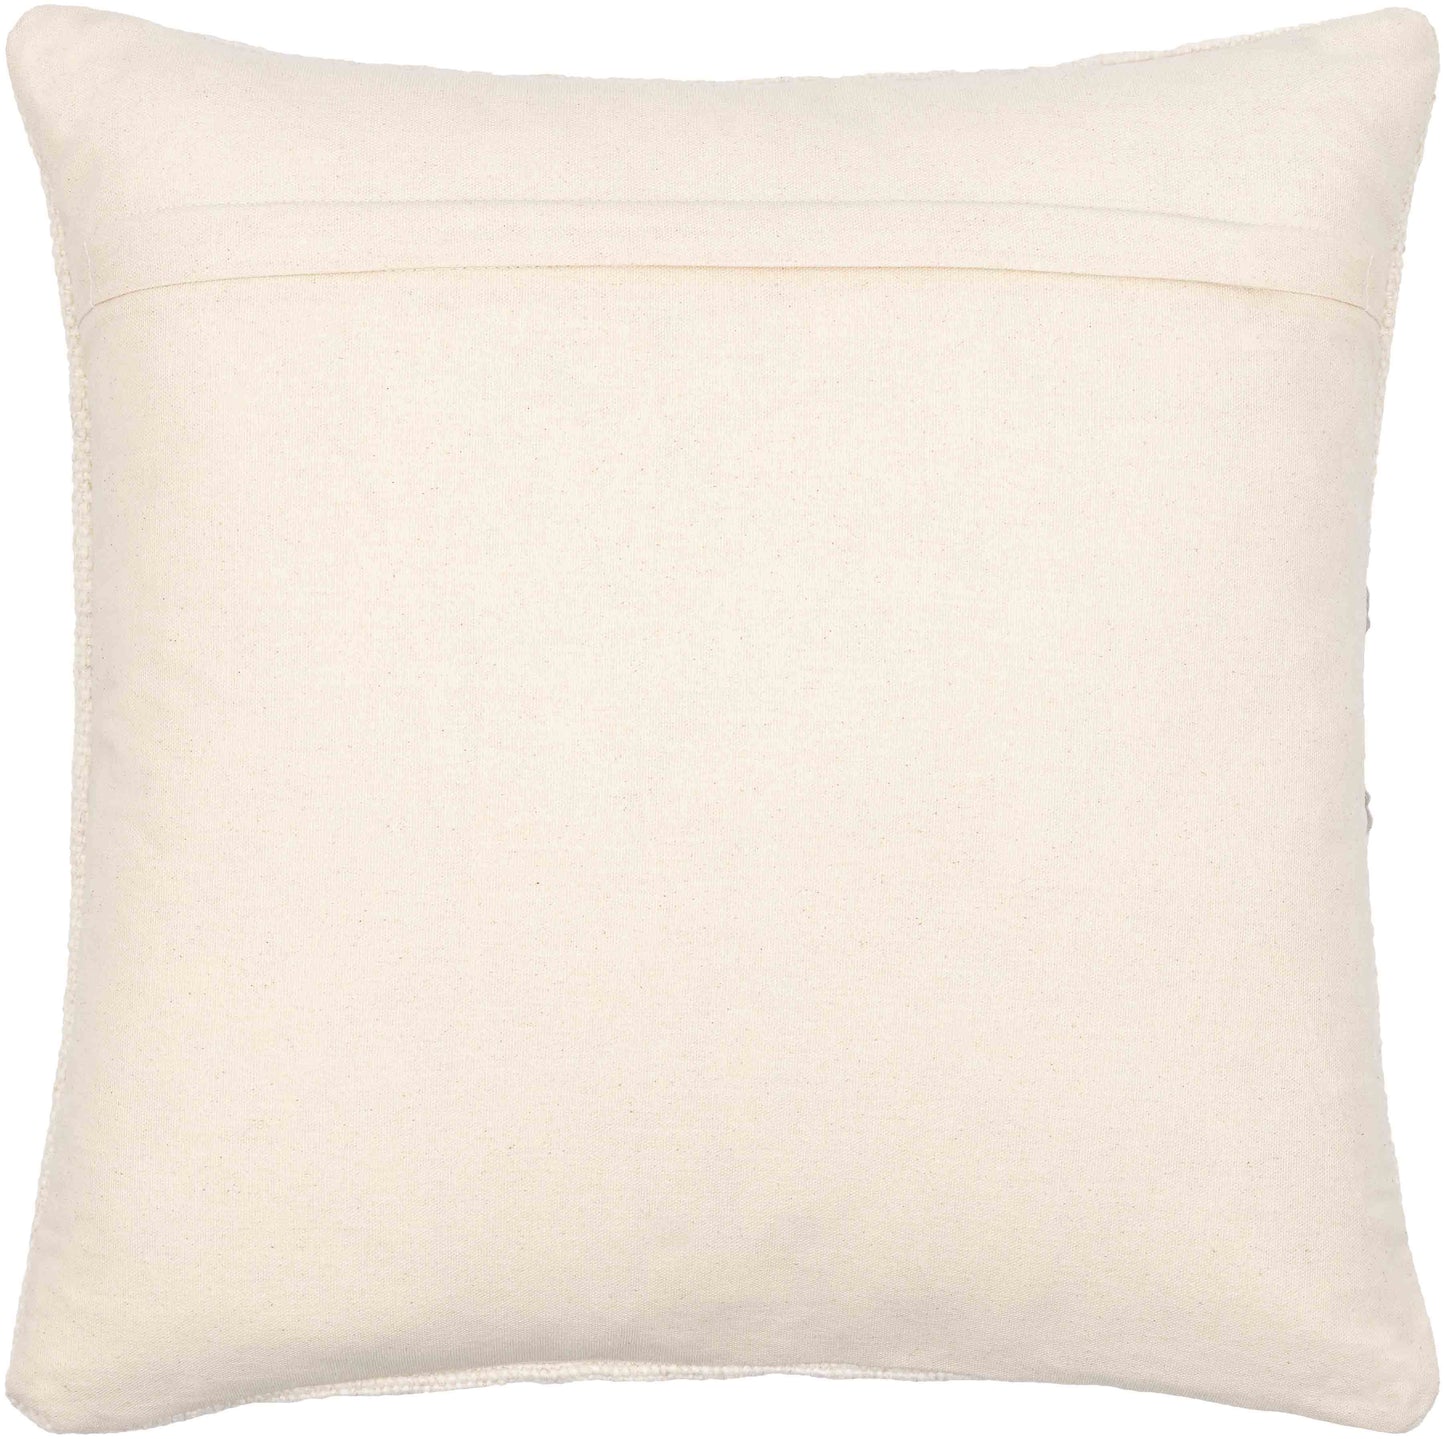 Charchia Cream Pillow Cover